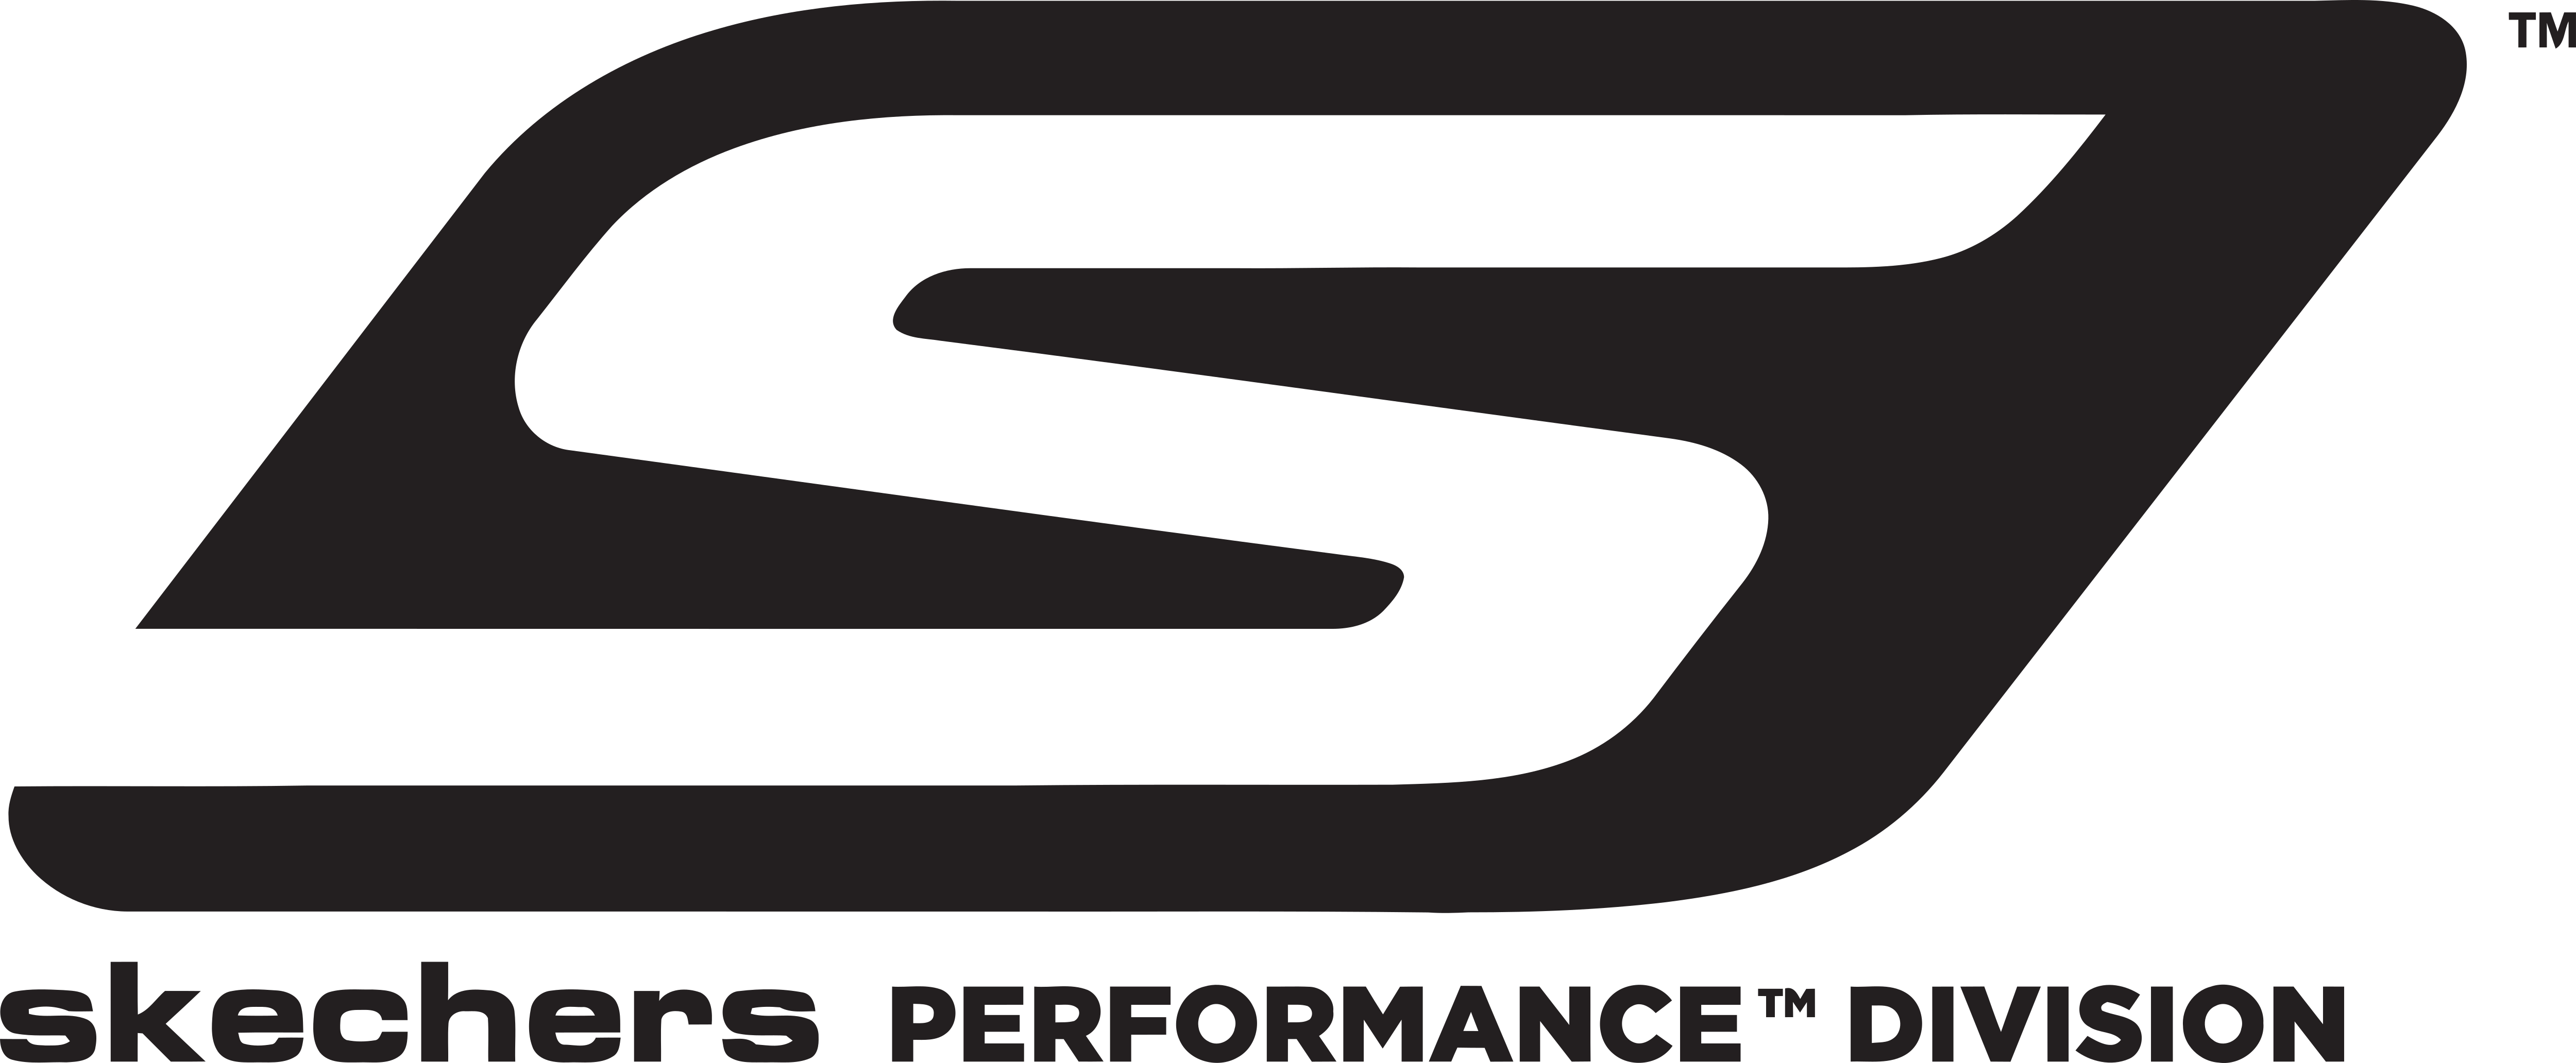 Pogo stick jump acortar triunfante Skechers Performance Logo Vector, Buy Now, Online, 58% OFF,  www.busformentera.com